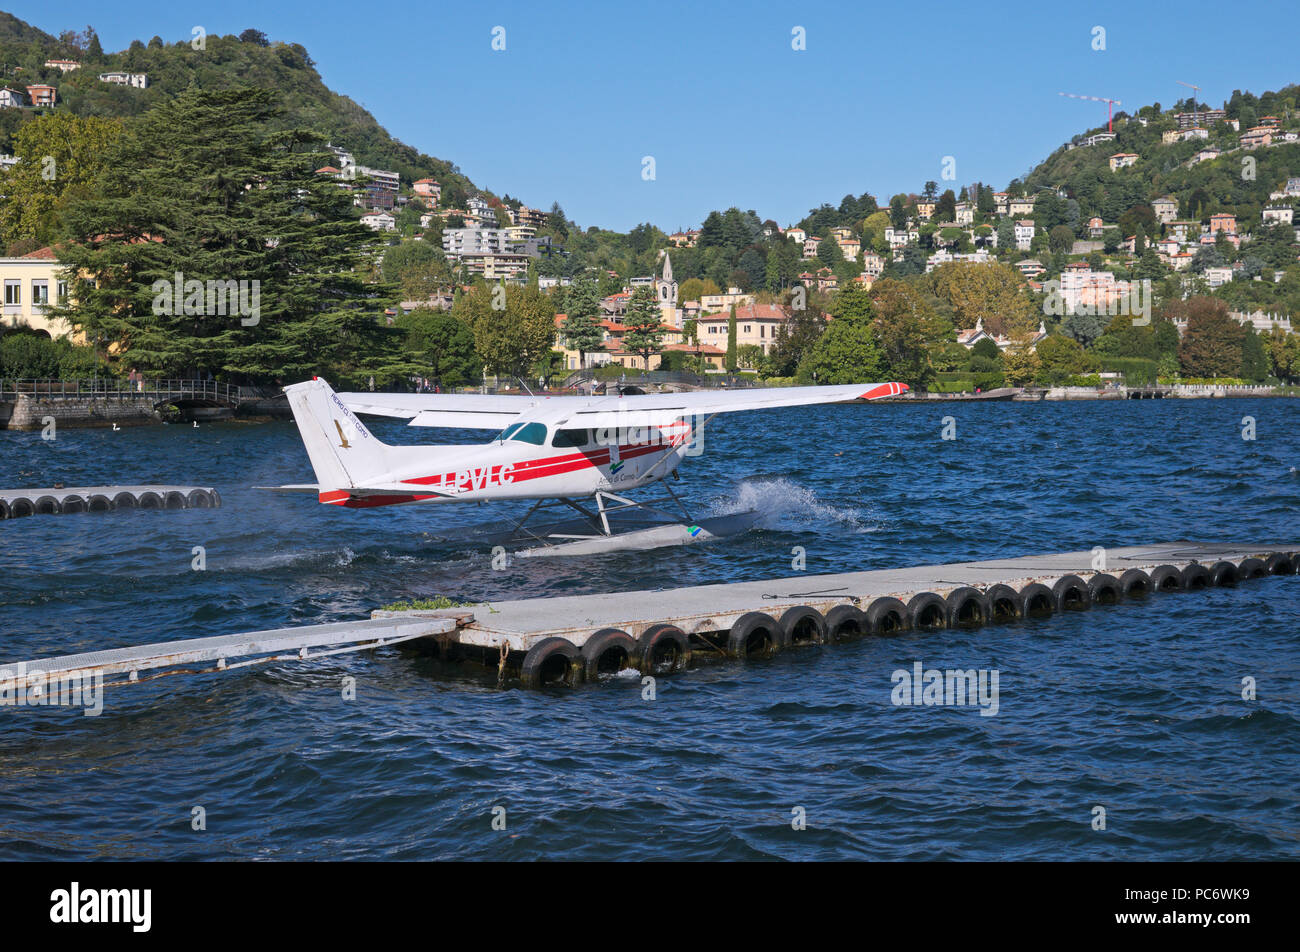 Cessna seaplane taking off in Lake of Como, Italy Stock Photo